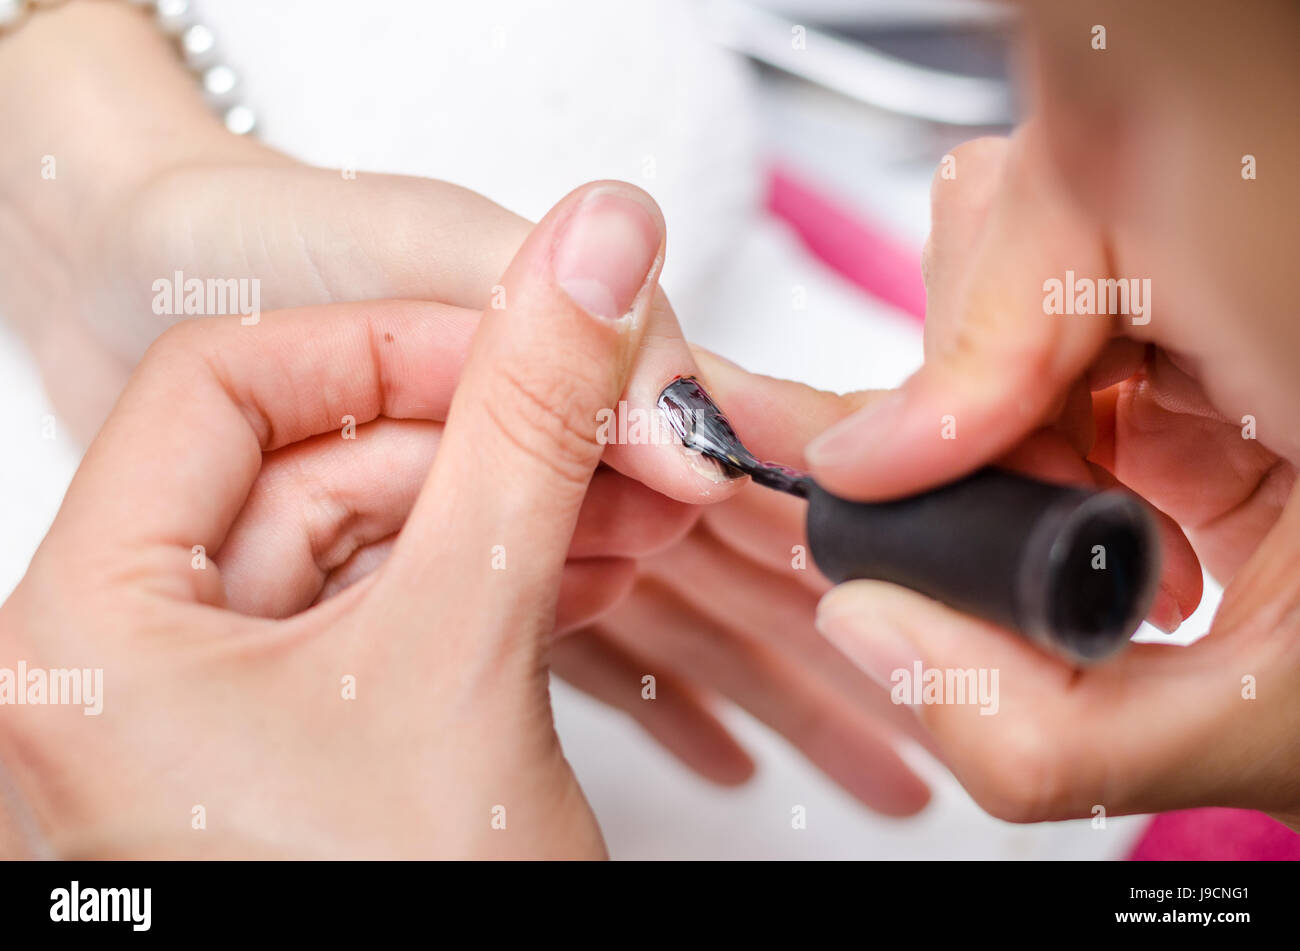 Woman applying black nail polish Stock Photo